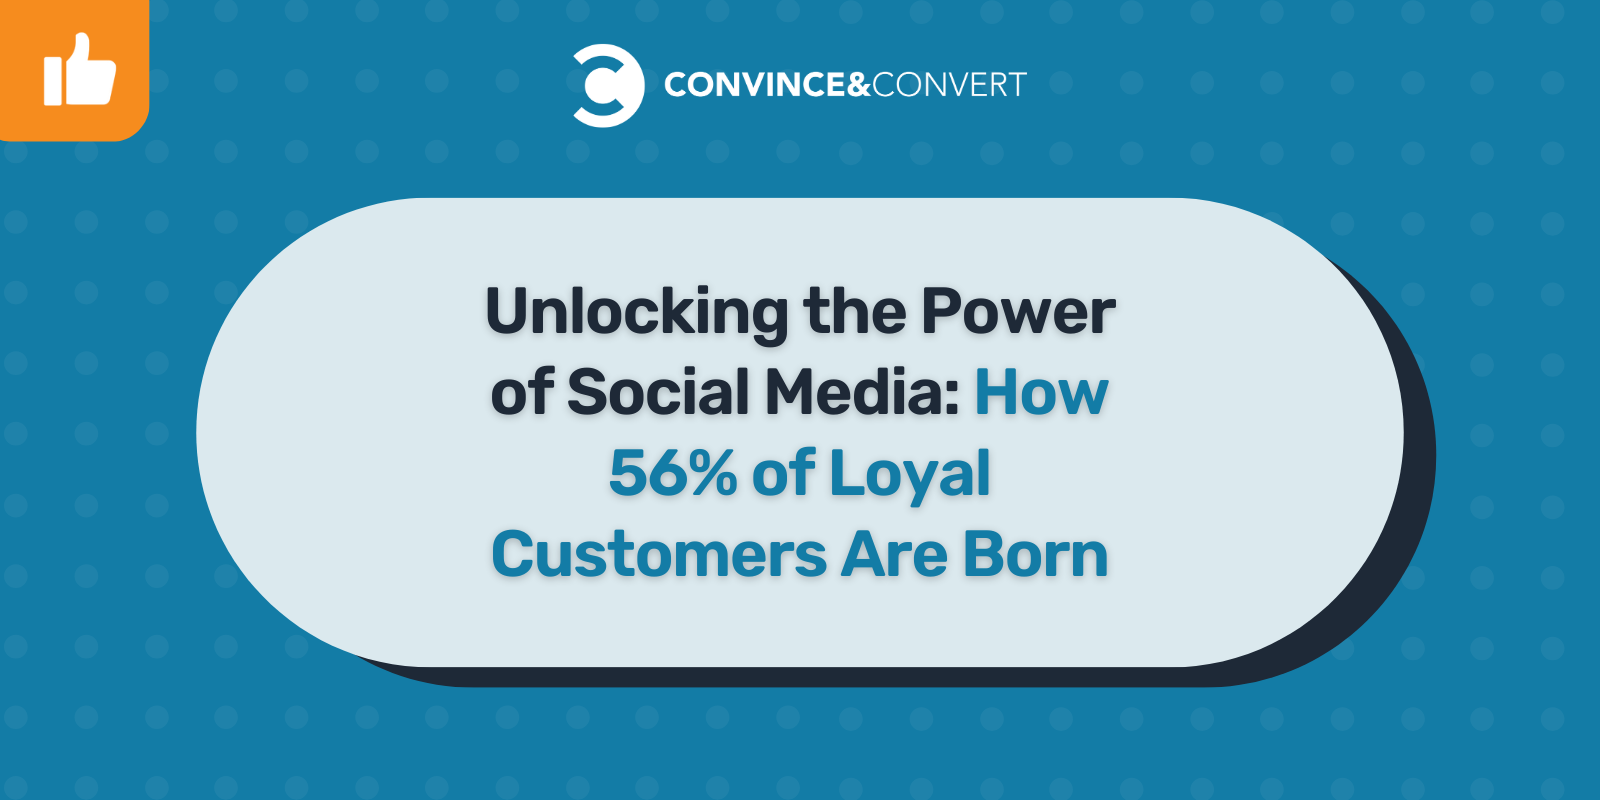 56% of Loyal Prospects are Developed on Social Media | Digital Noch